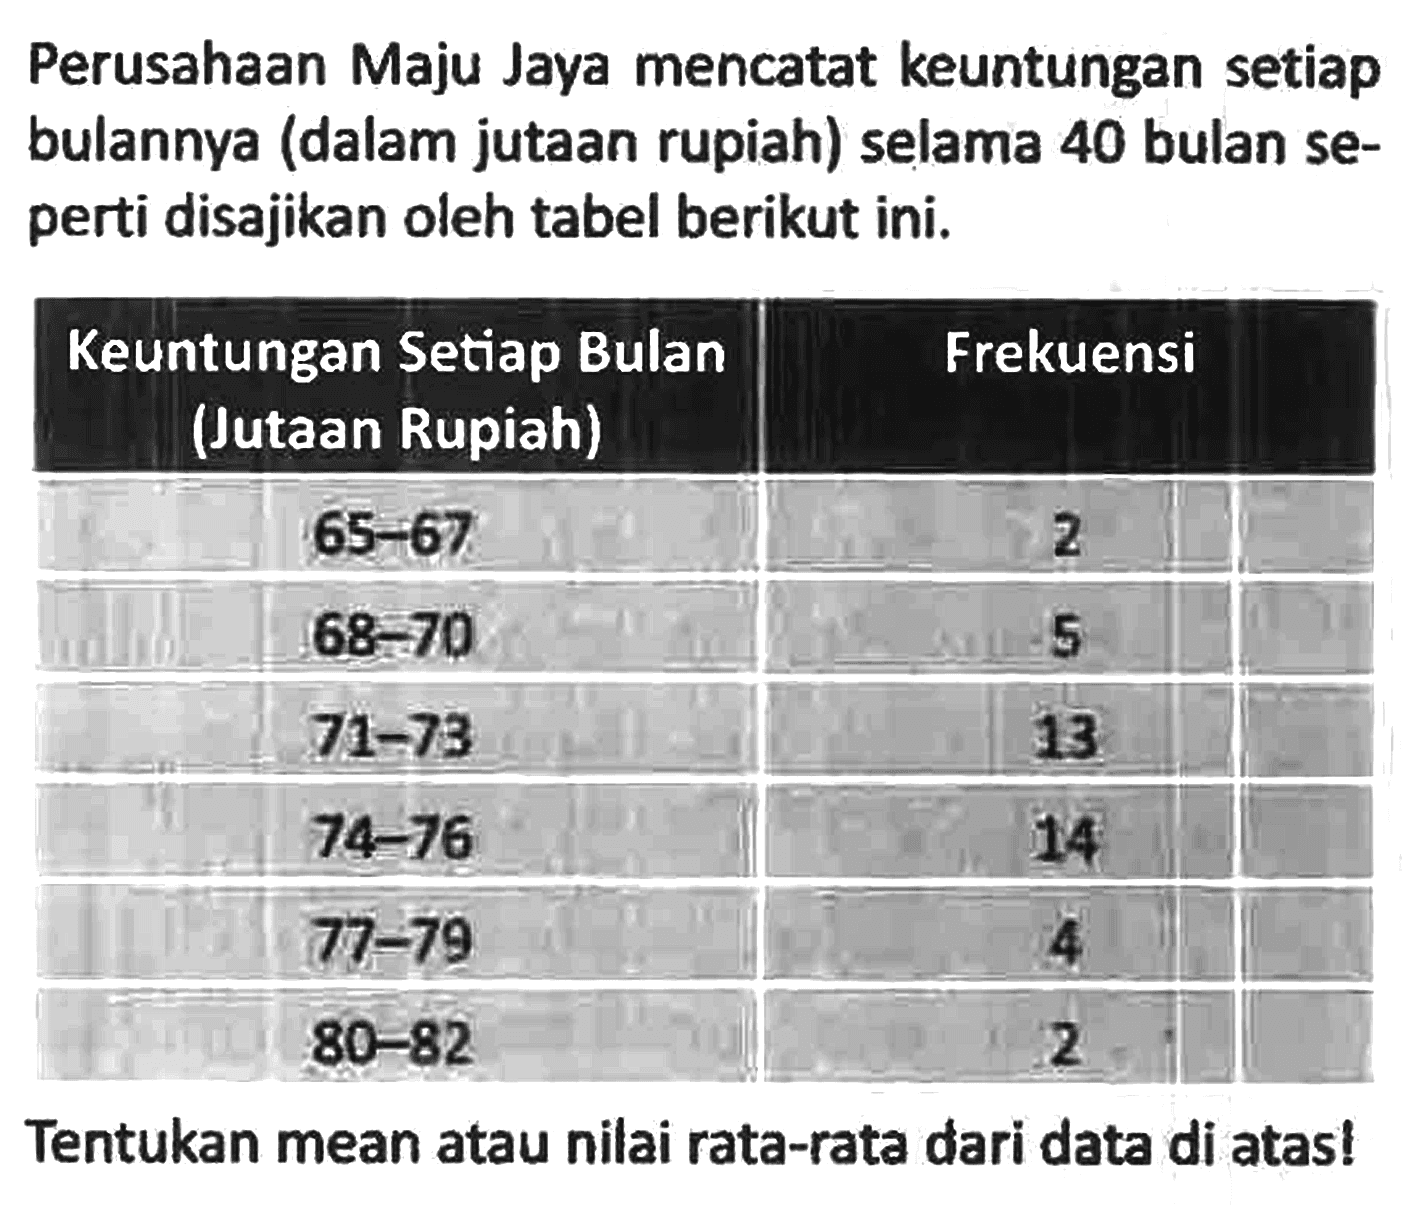 Perusahaan Maju Jaya mencatat keuntungan setiap bulannya (dalam jutaan rupiah) selama 40 bulan seperti disajikan oleh tabel berikut ini.

 Keuntungan Setiap Bulan (Jutaan Rupiah)  Frekuensi 
 65-67 2 
 68-70 5 
 71-73 13 
 74-76 14 
 77-79 4 
 80-82 2 

Tentukan mean atau nilai rata-rata dari data di atas!